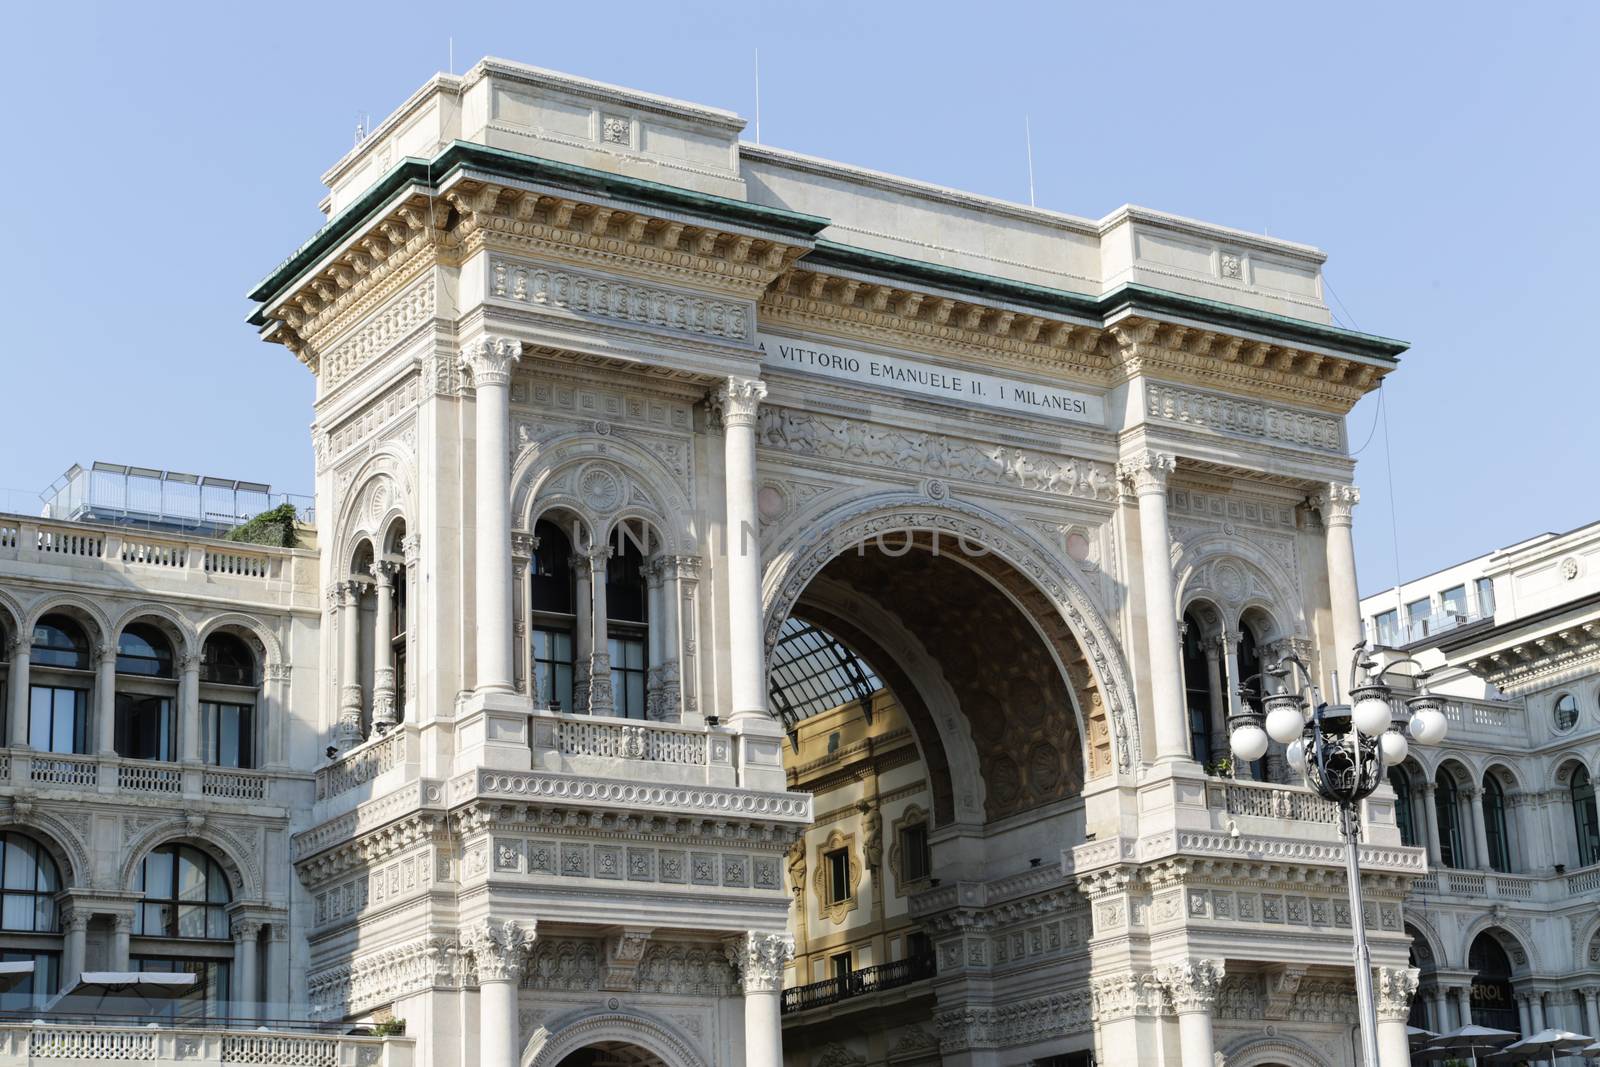 The Vittorio Emanuele II Gallery in Milan, Italy